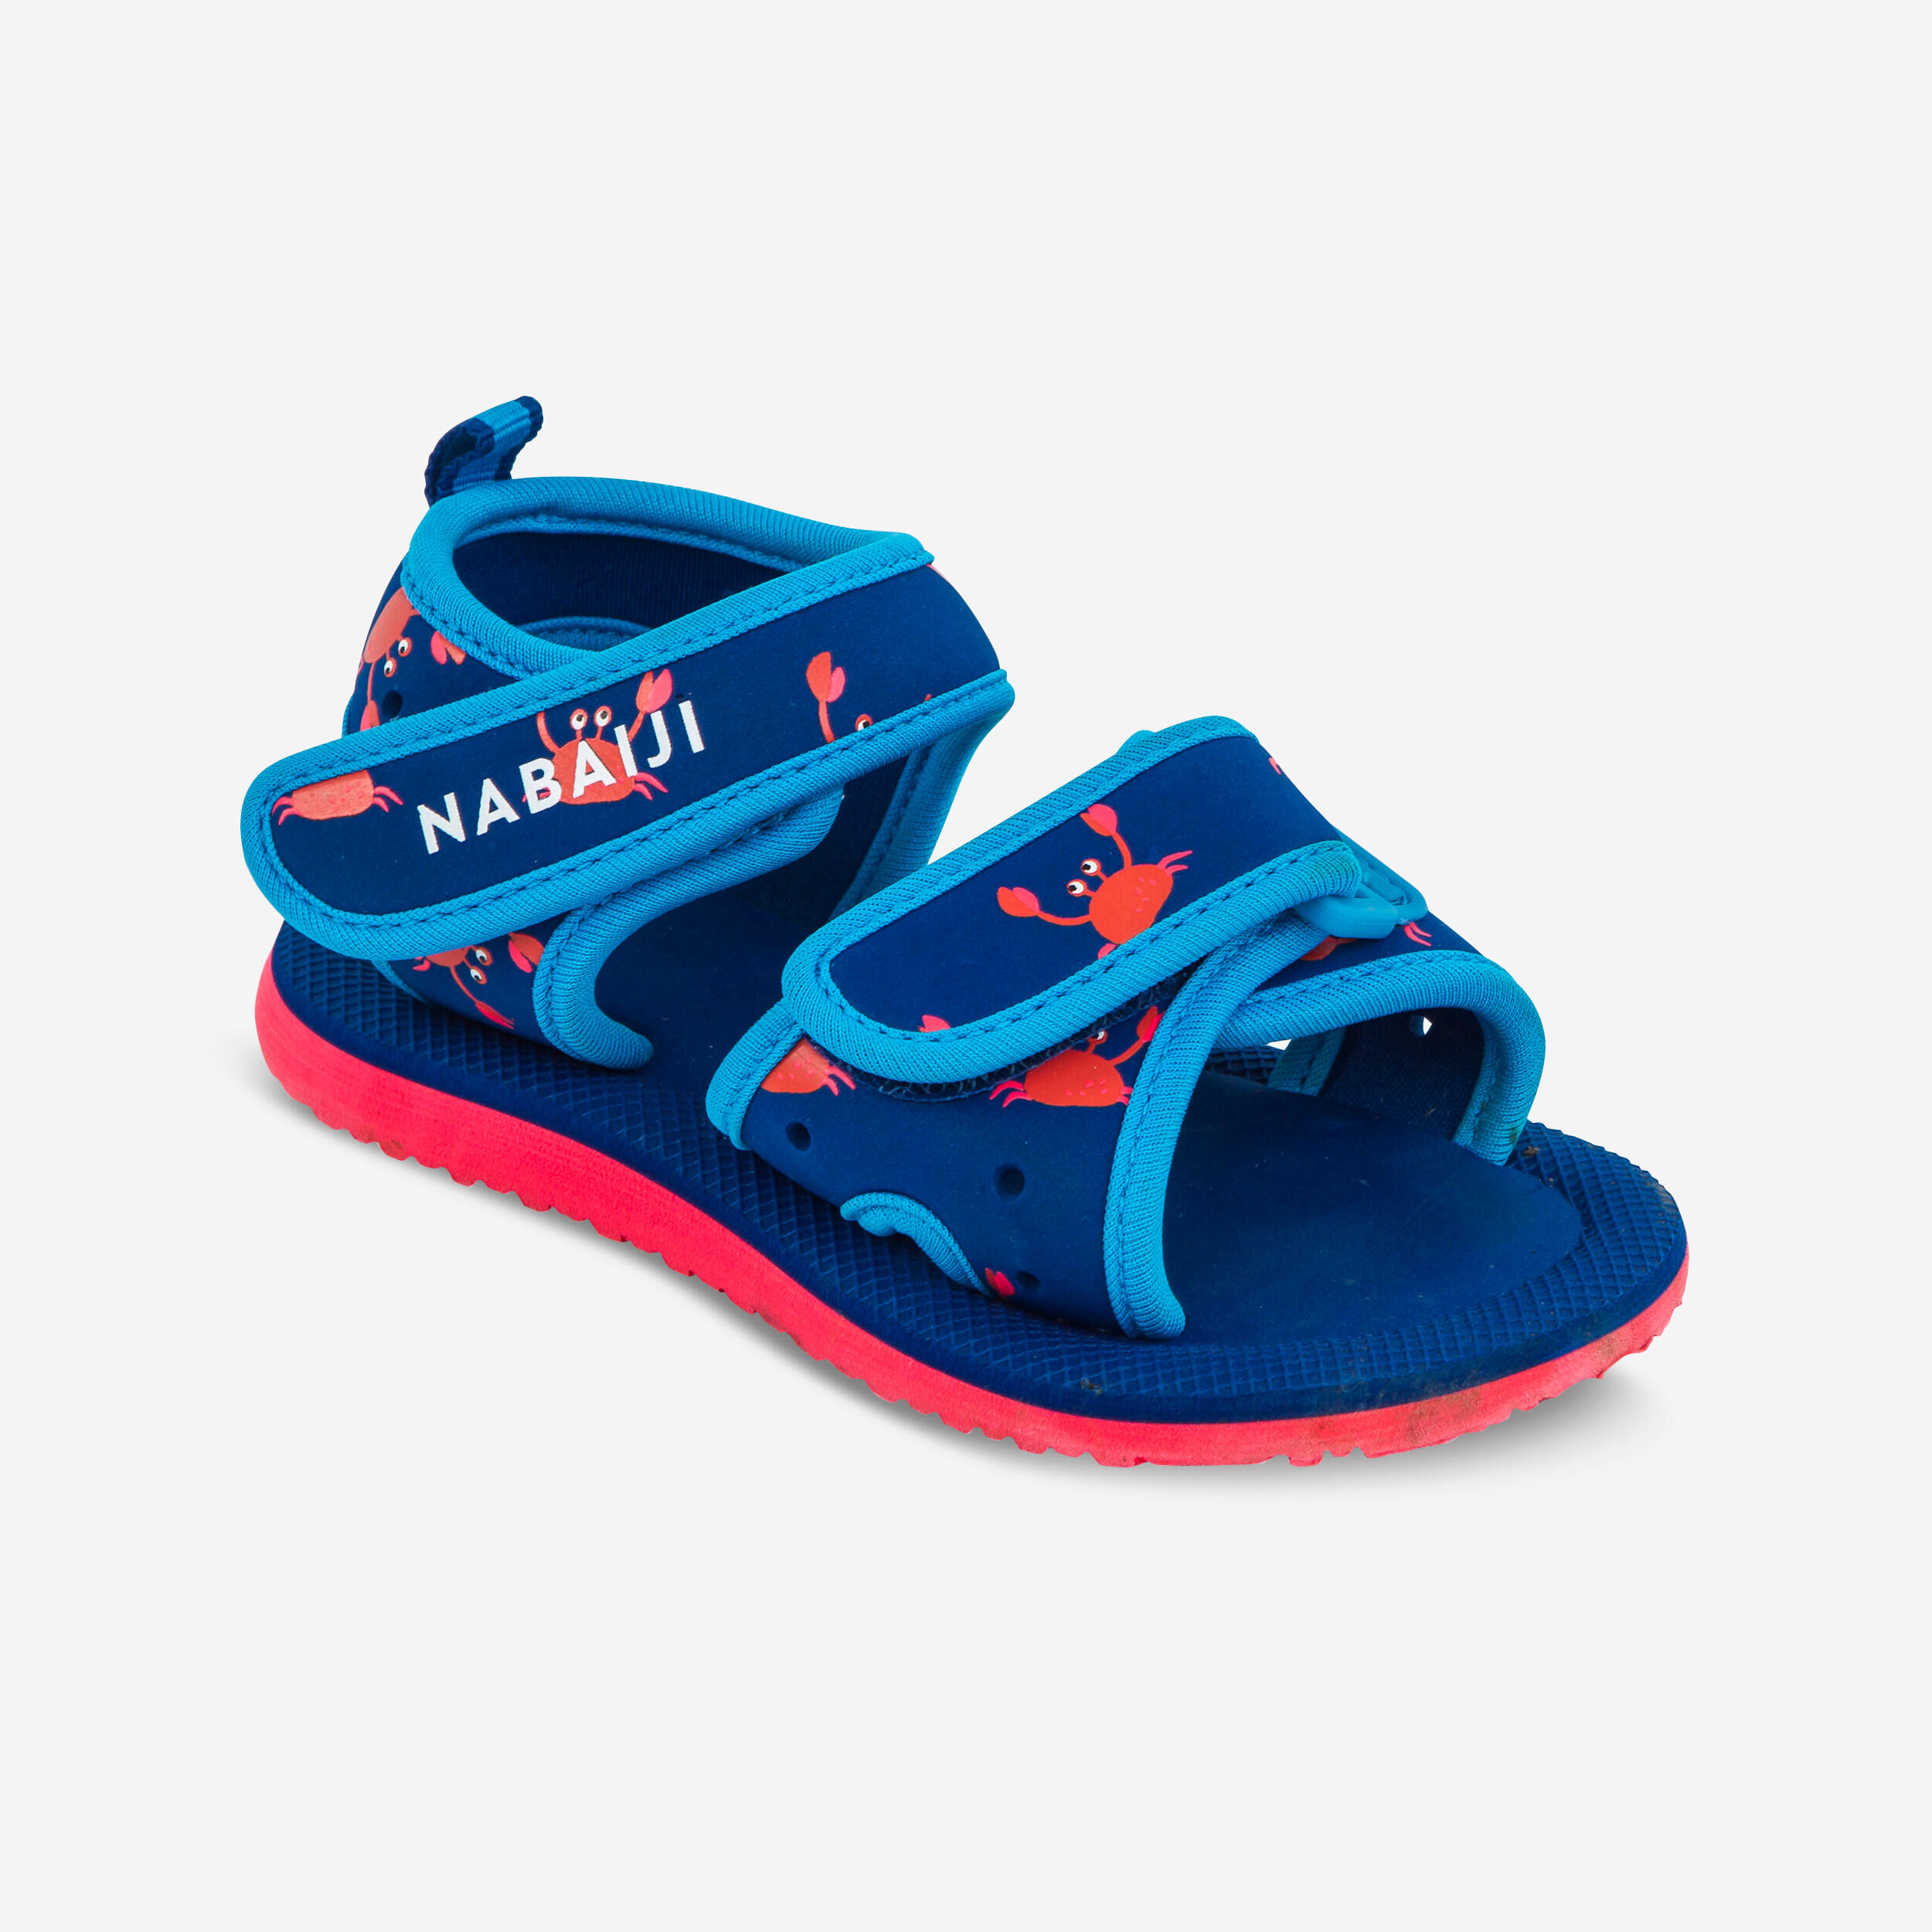 NABAIJI Baby Swimming Sandals - Blue